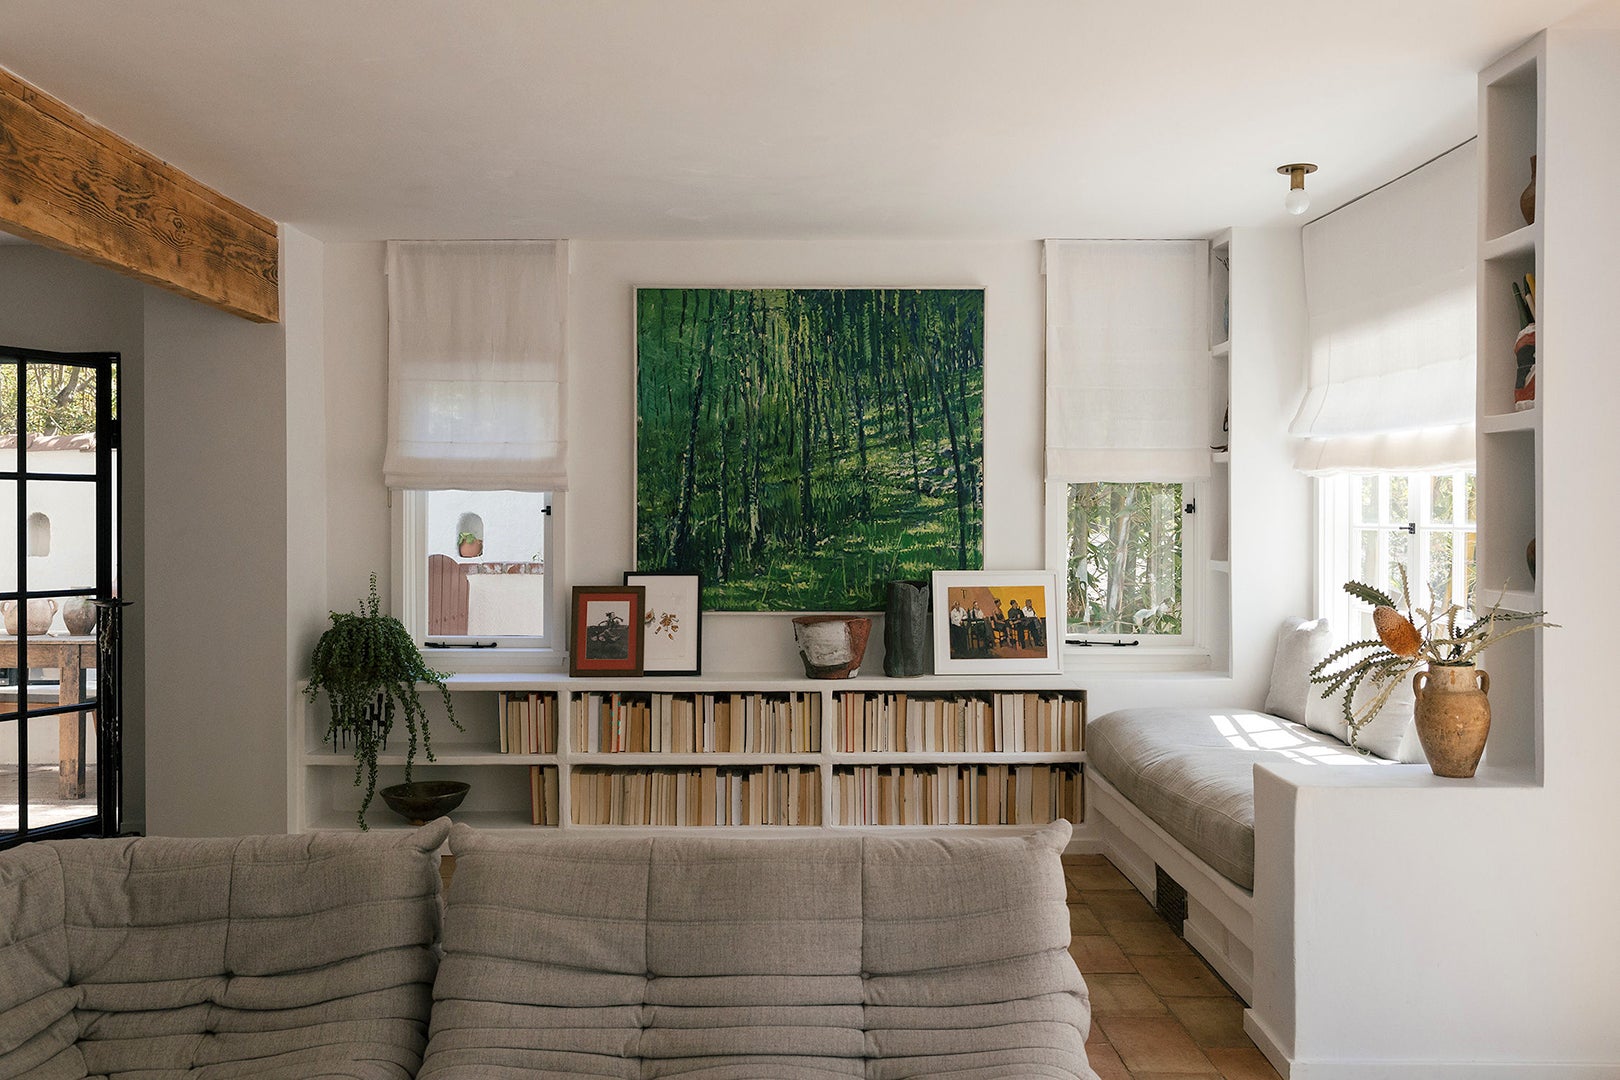 Gray Togo Sofa with bookshelf in background